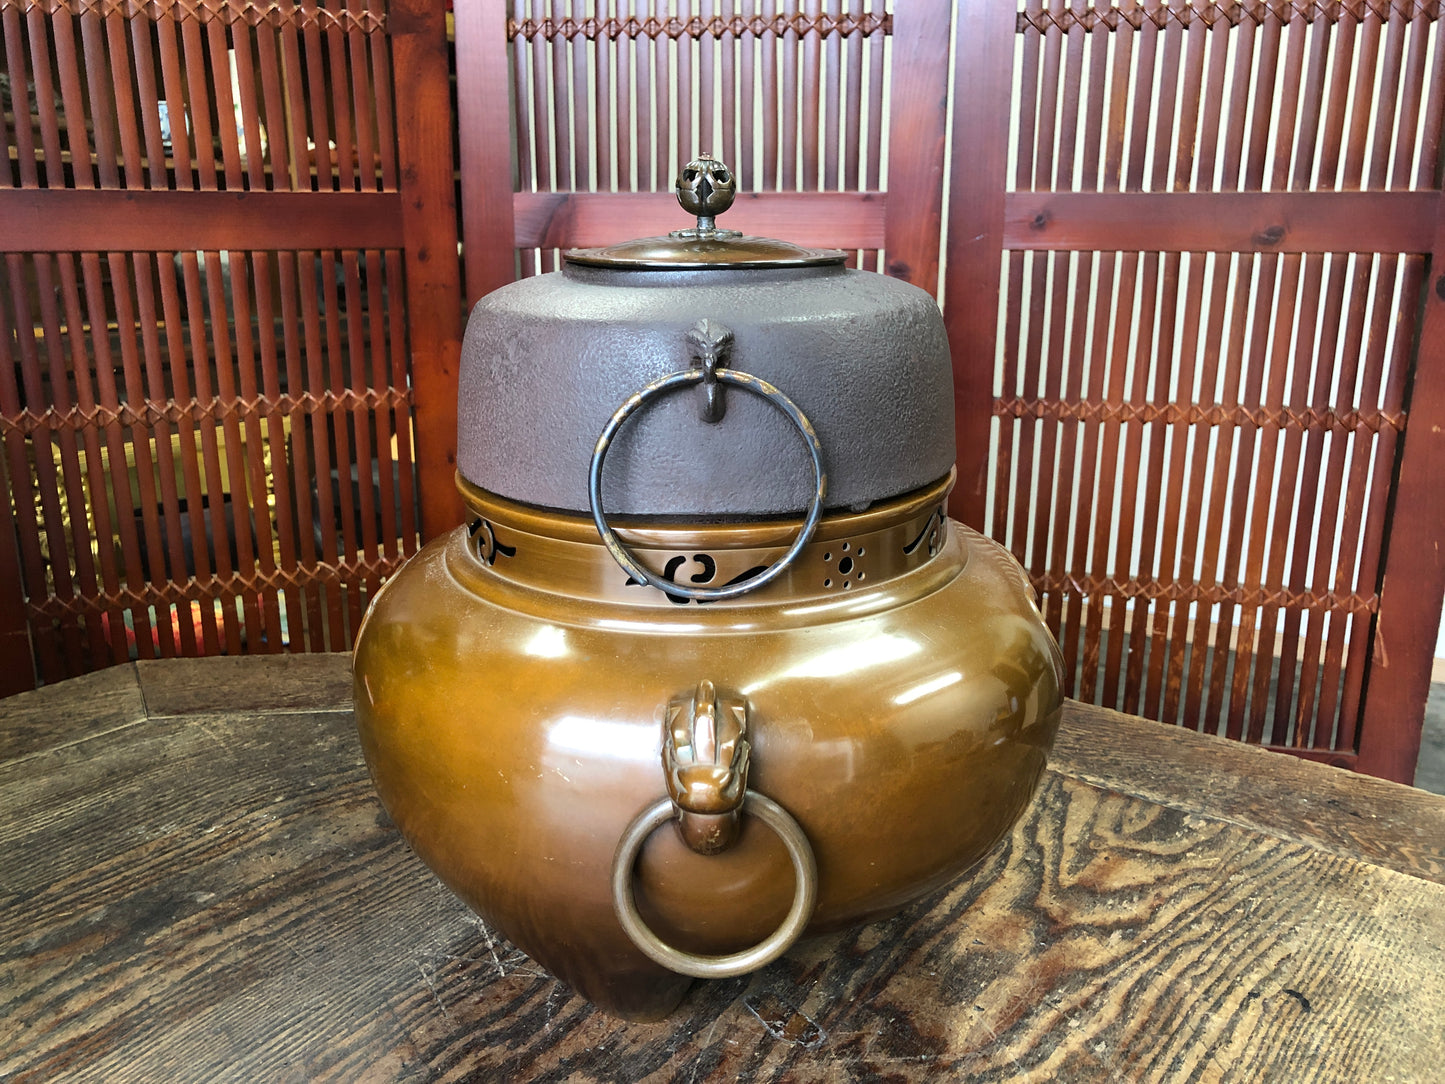 Y3404 CHAGAMA Iron kettle brazier set box Japanese Tea Ceremony Japan antique